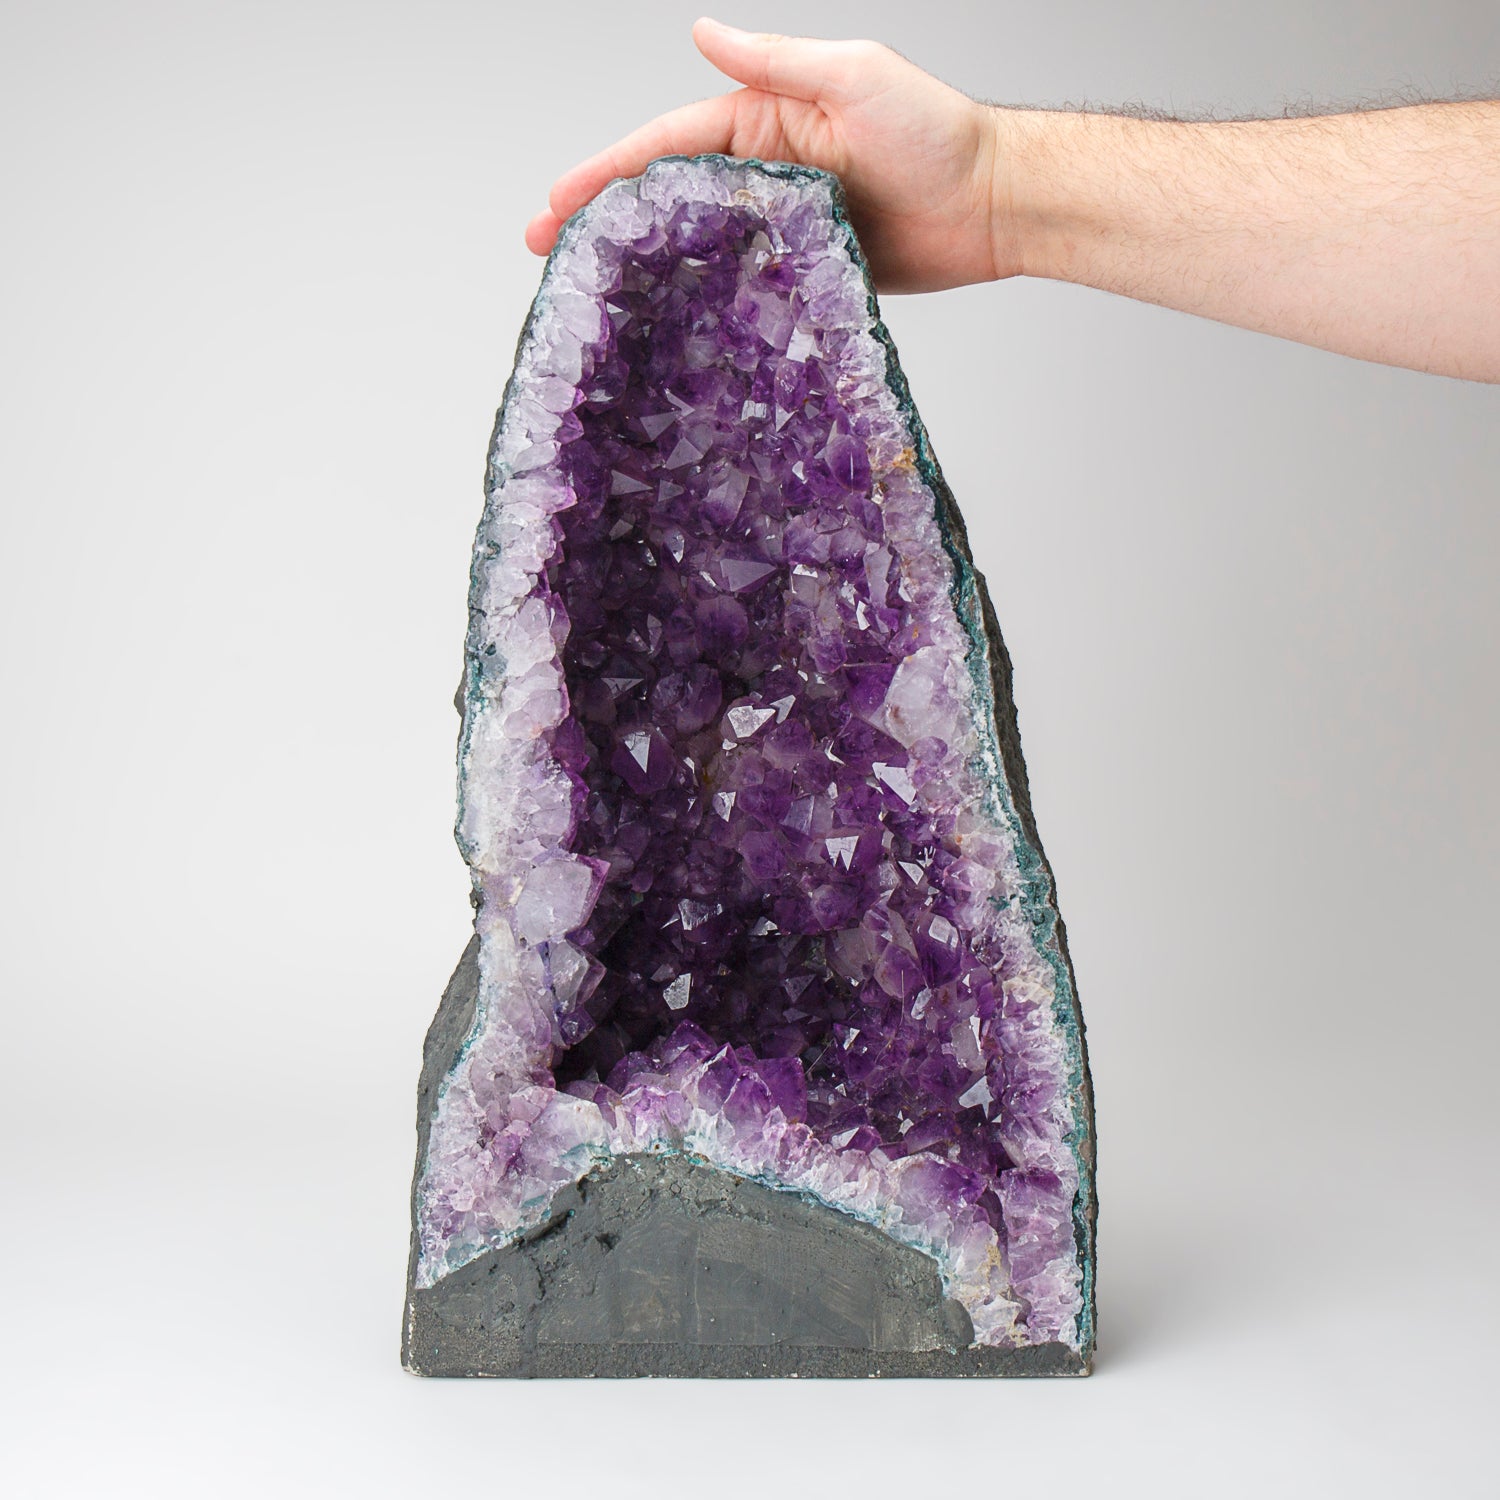 Genuine Amethyst Cluster Geode from Brazil (49 lbs)